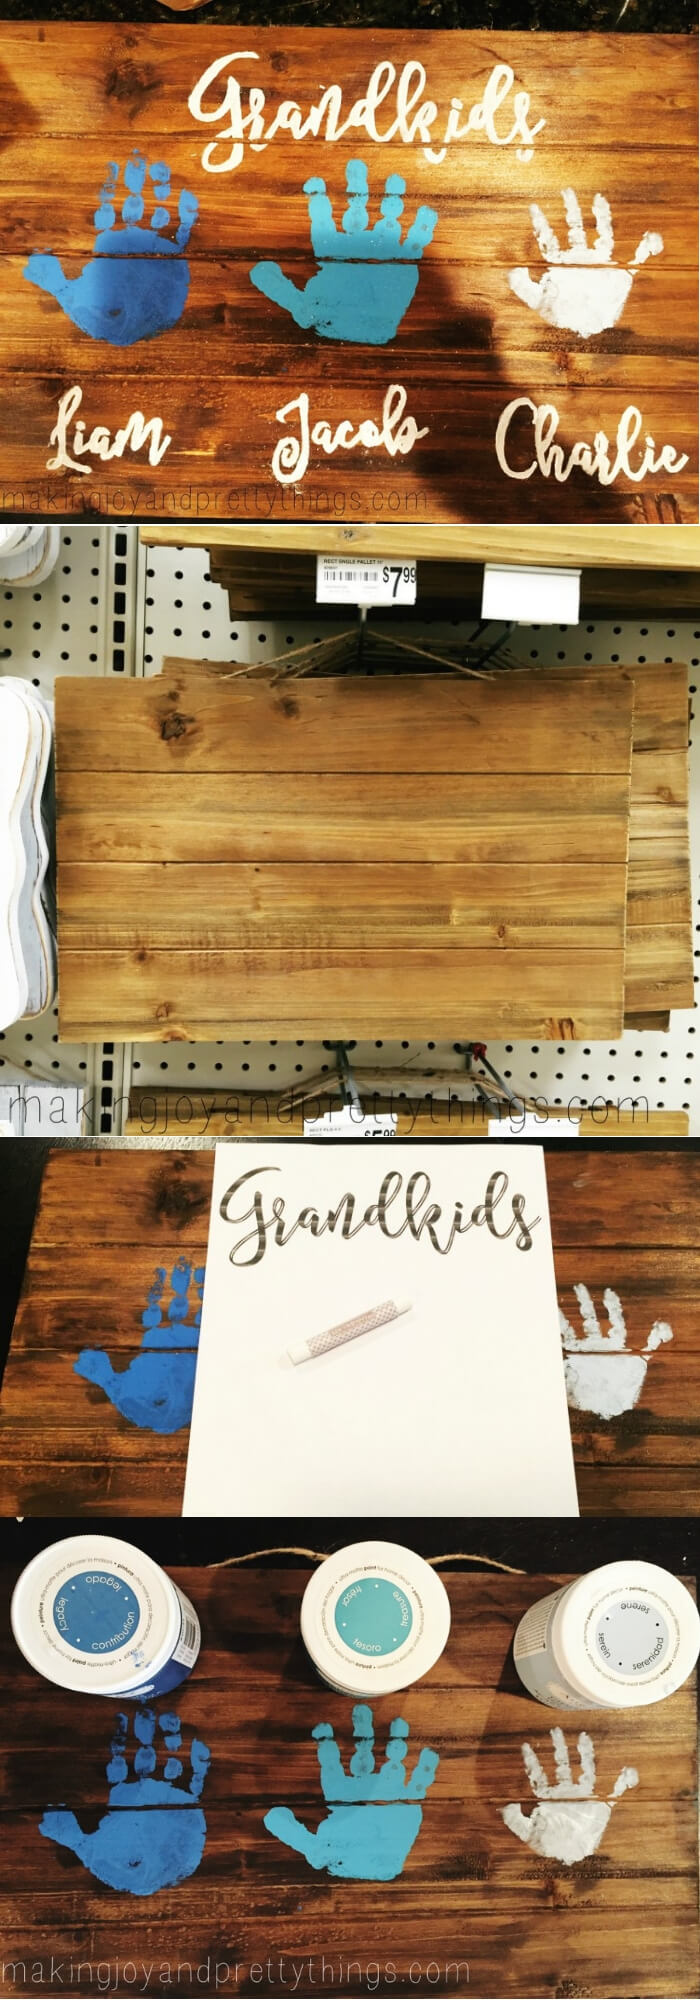 DIY Handprint Art | Christmas Gifts for Grandparents: Creative Holiday Ideas for Grandma and Grandpa